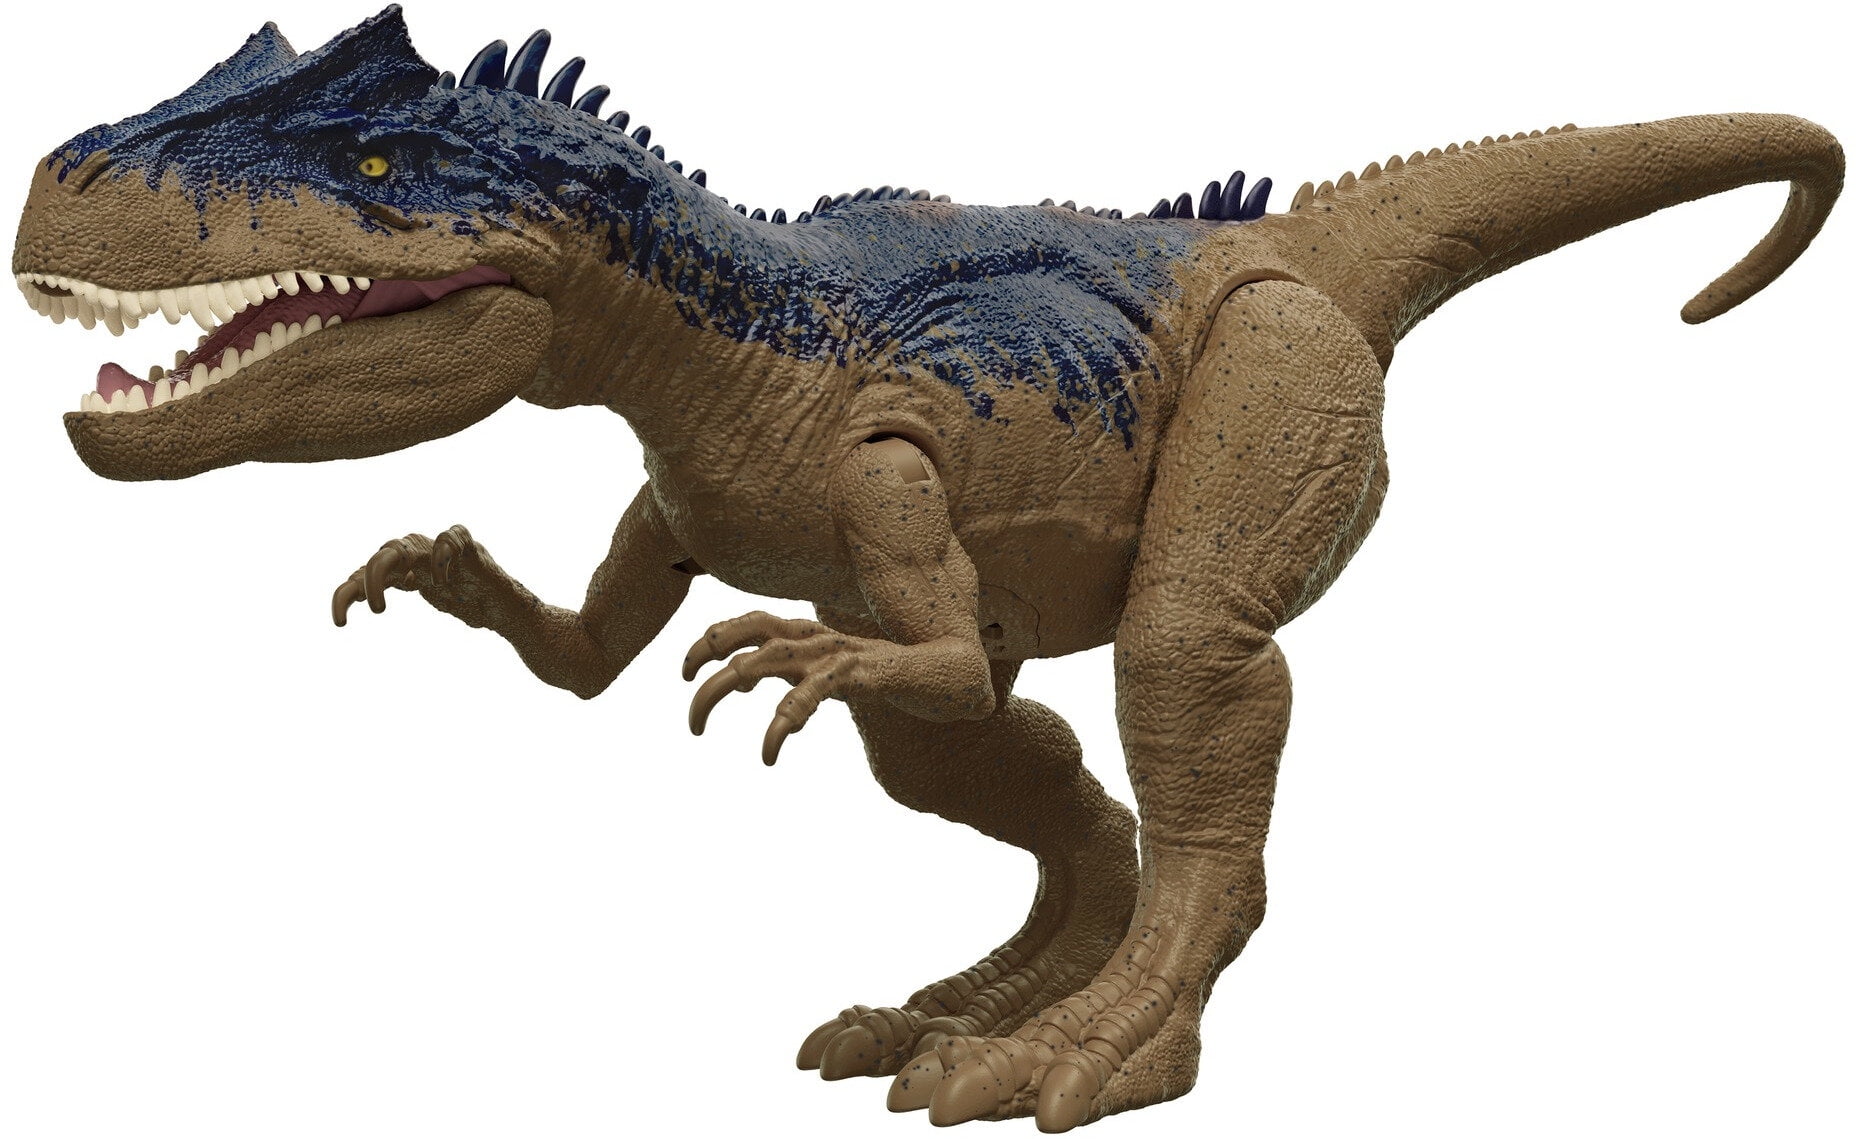 Jurassic World Camp Cretaceous Dinosaur Adventure 12 inch Action Figure for sale online 